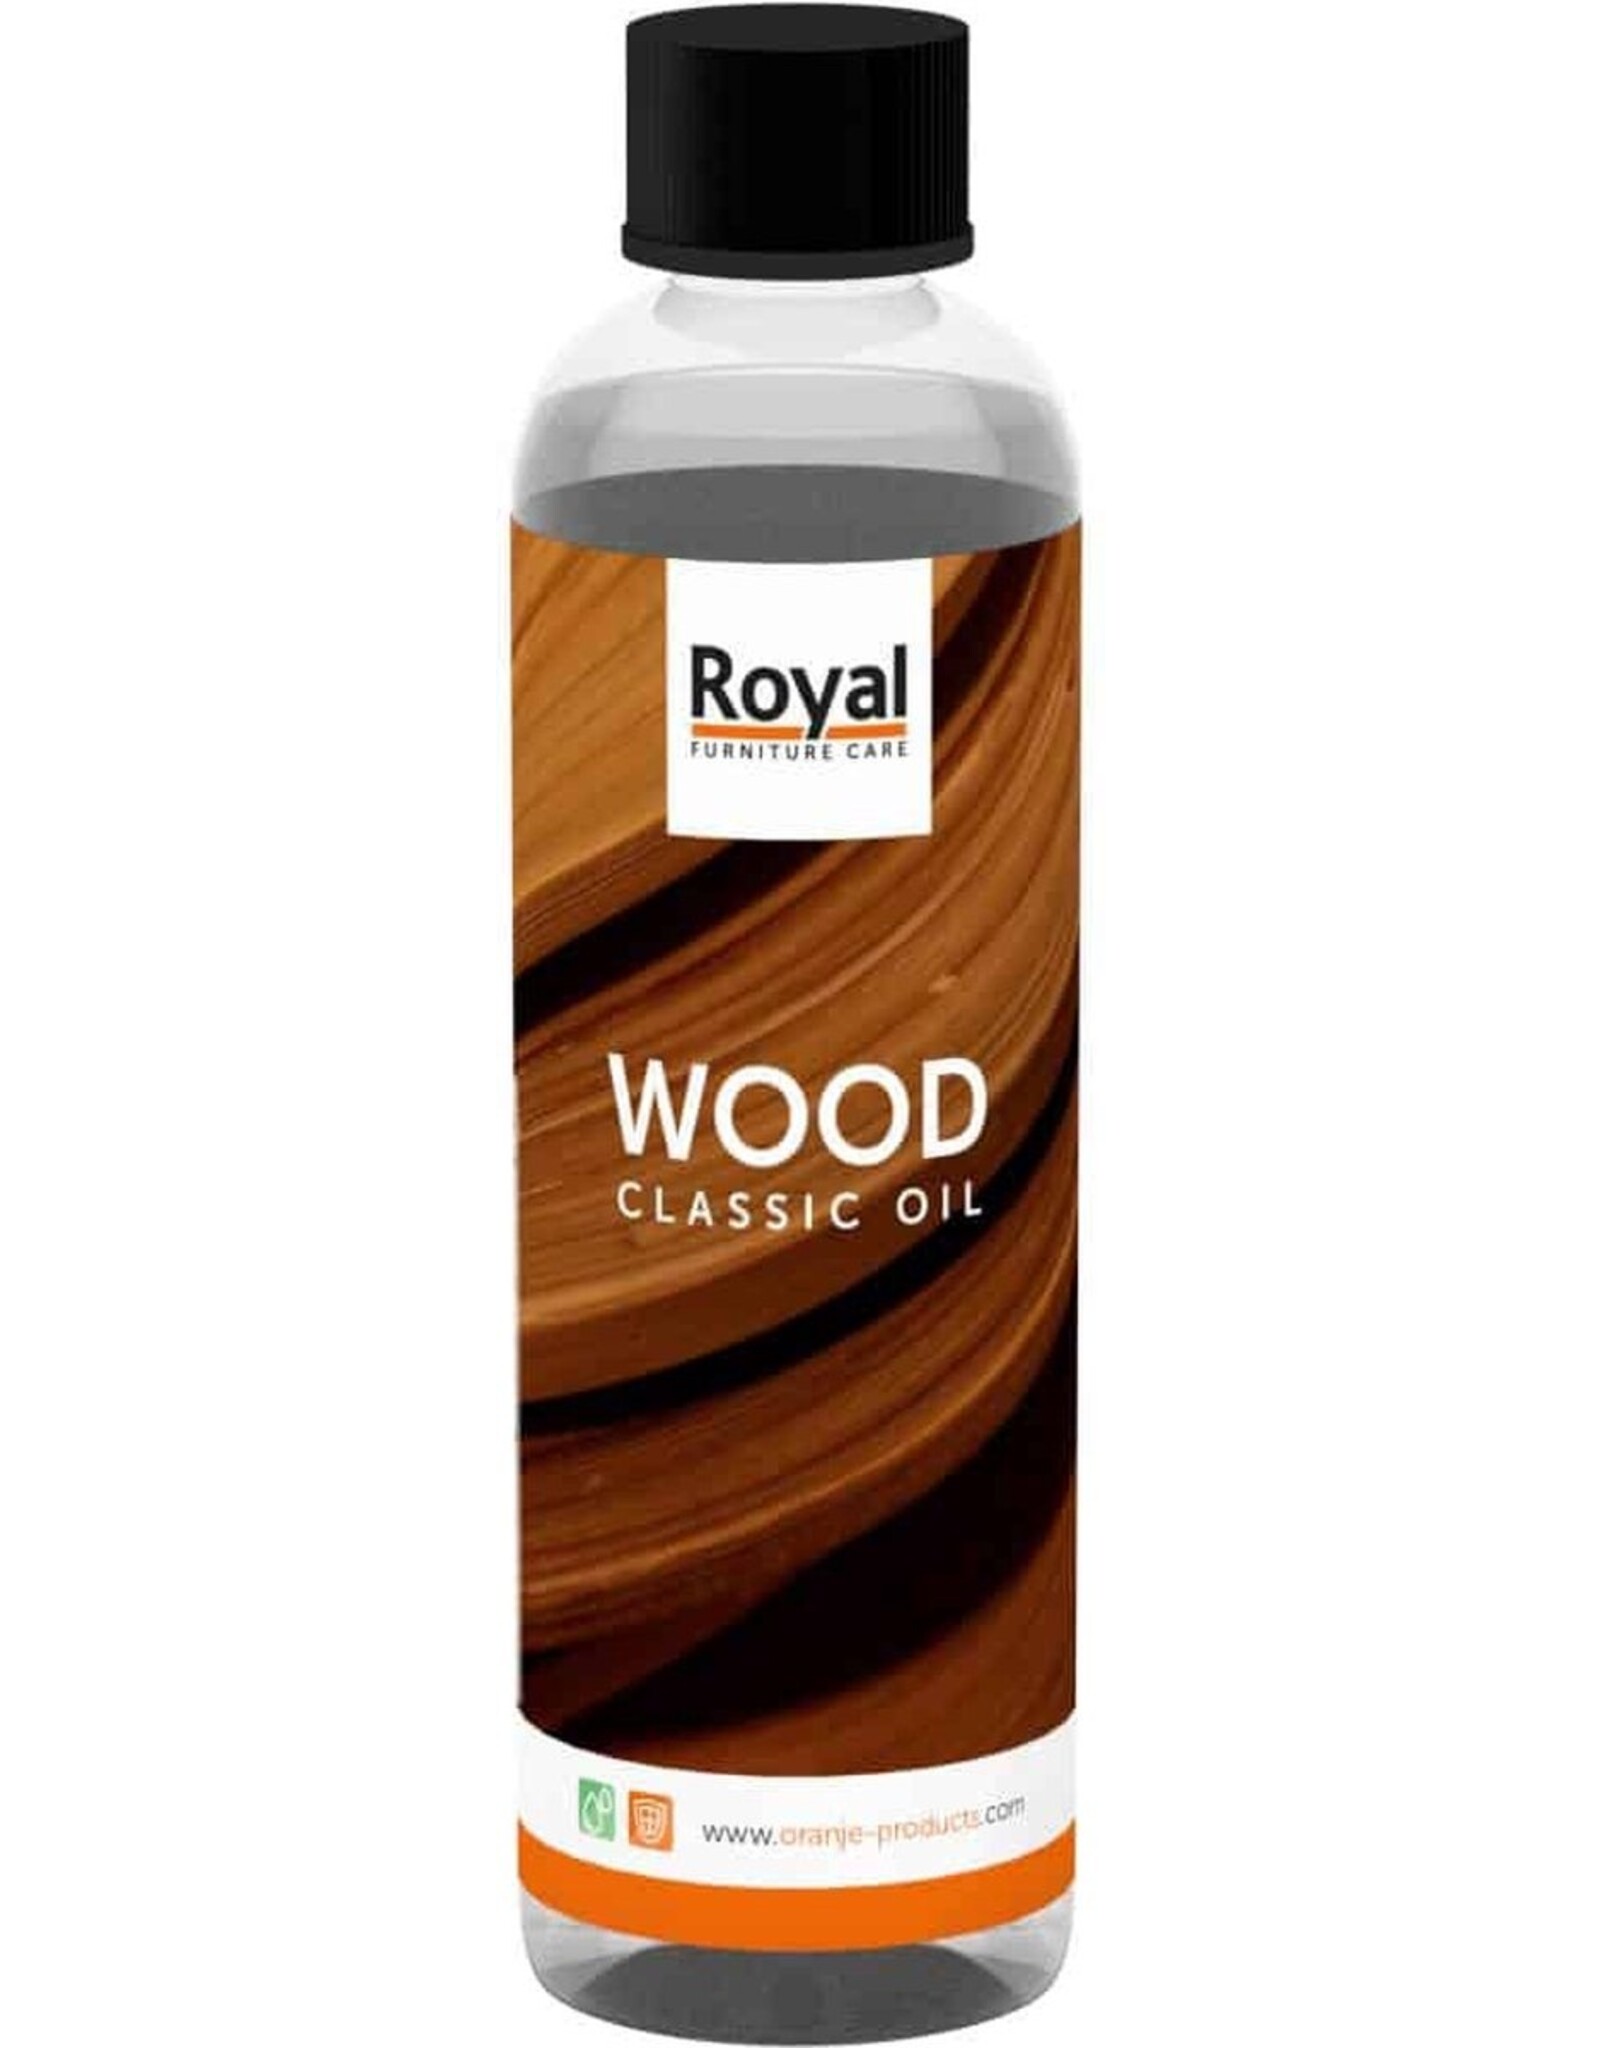 Royal Furniture care Royal Classic oil